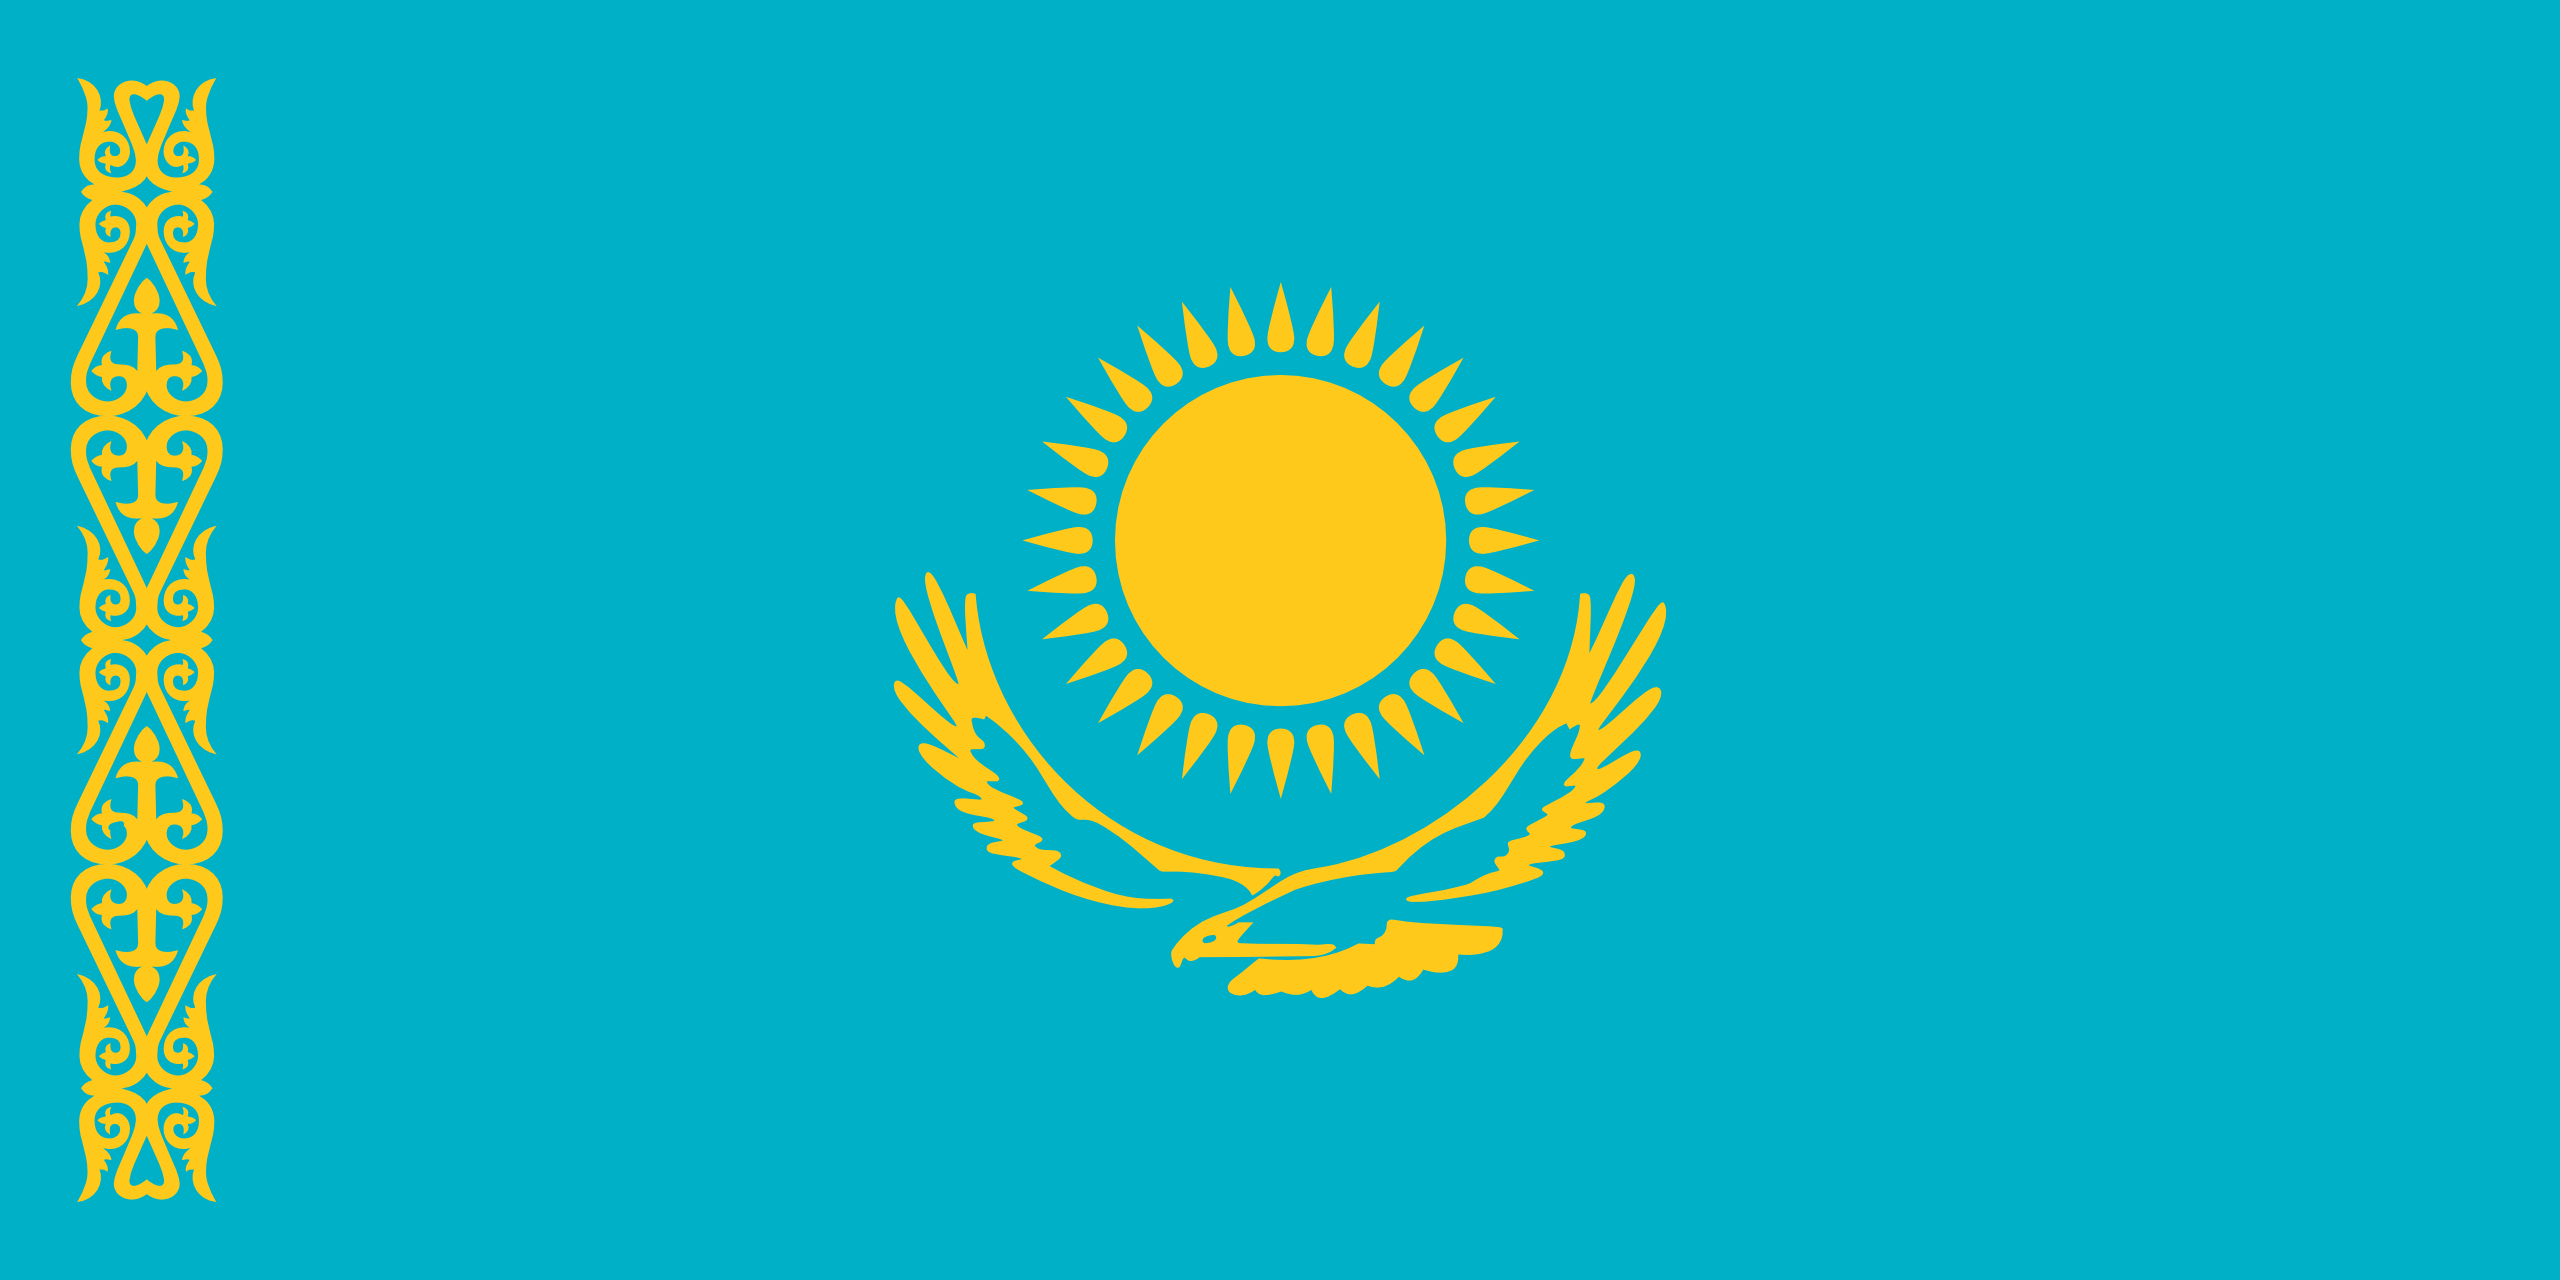 kazachstan.png